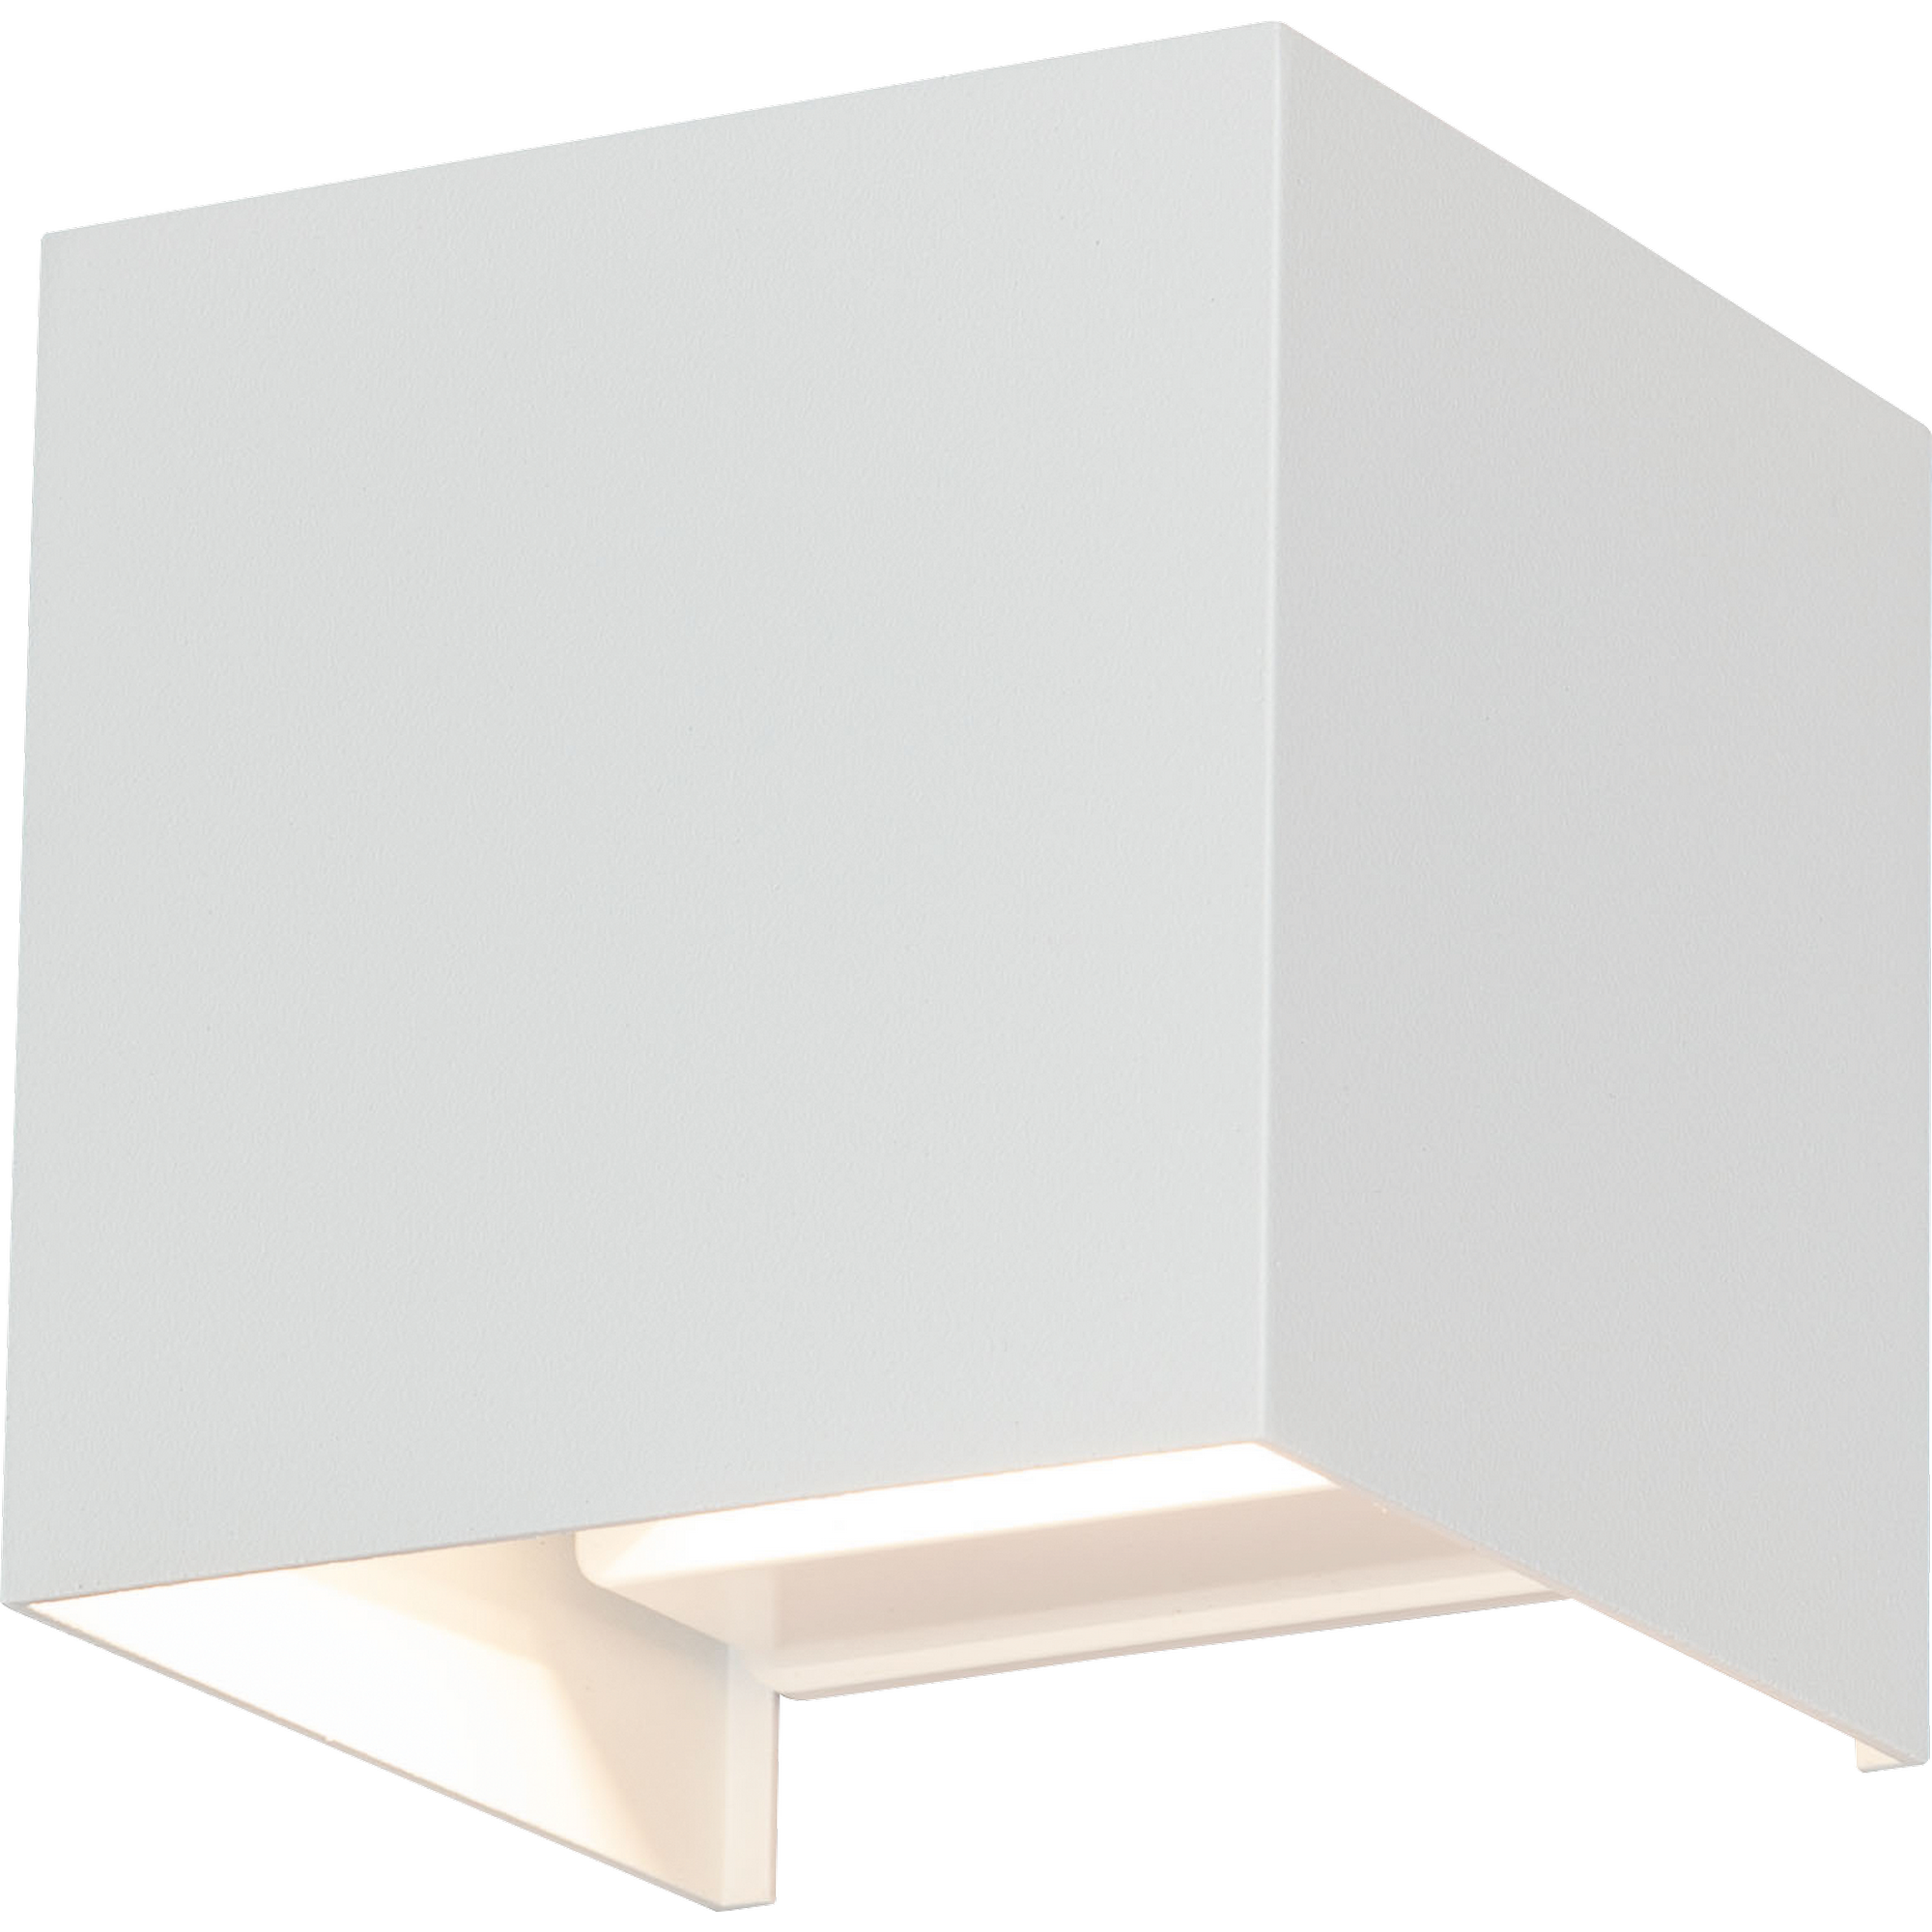 LED-Außenwandleuchte 'Pula' weiß 10 x 10 x 10 cm + product picture